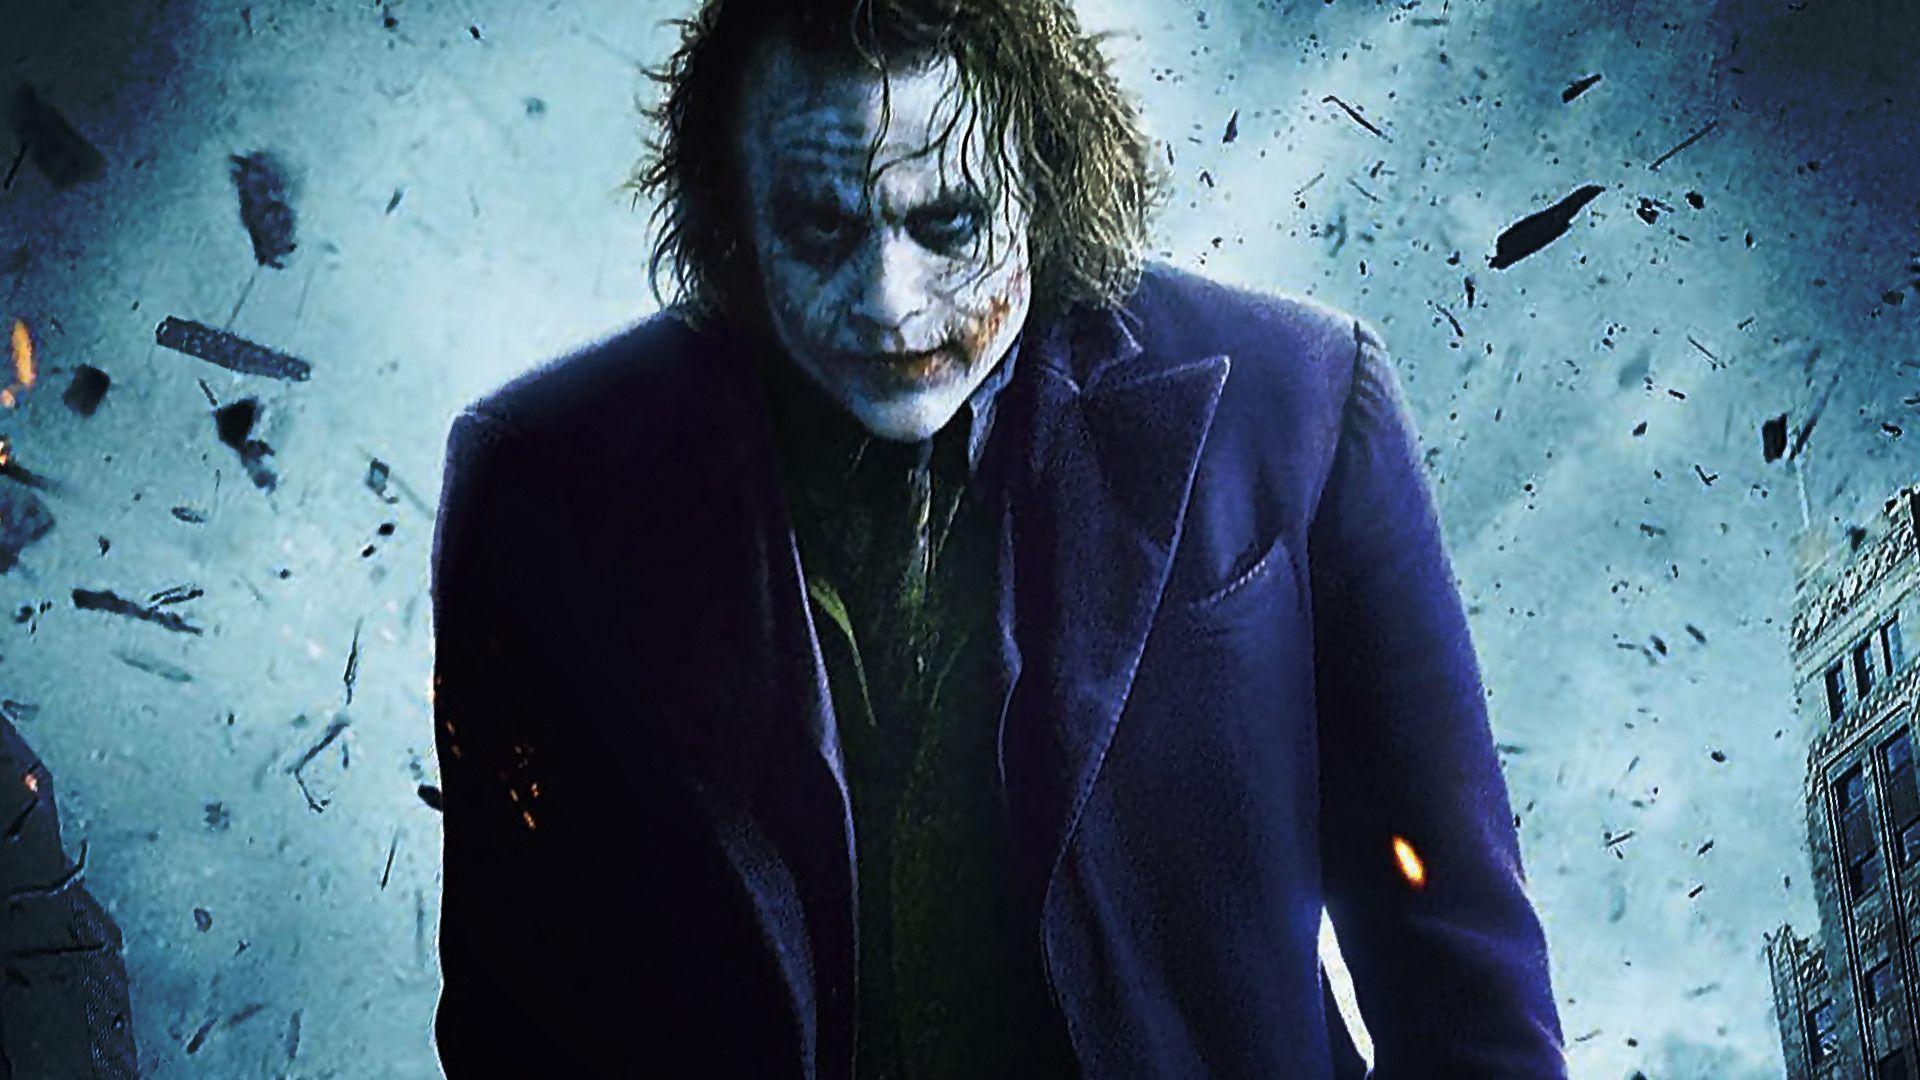 Dark Knight Joker Images Hd 1080p Download Free Joker Knight Dark Wallpaper Wallpapers Hd